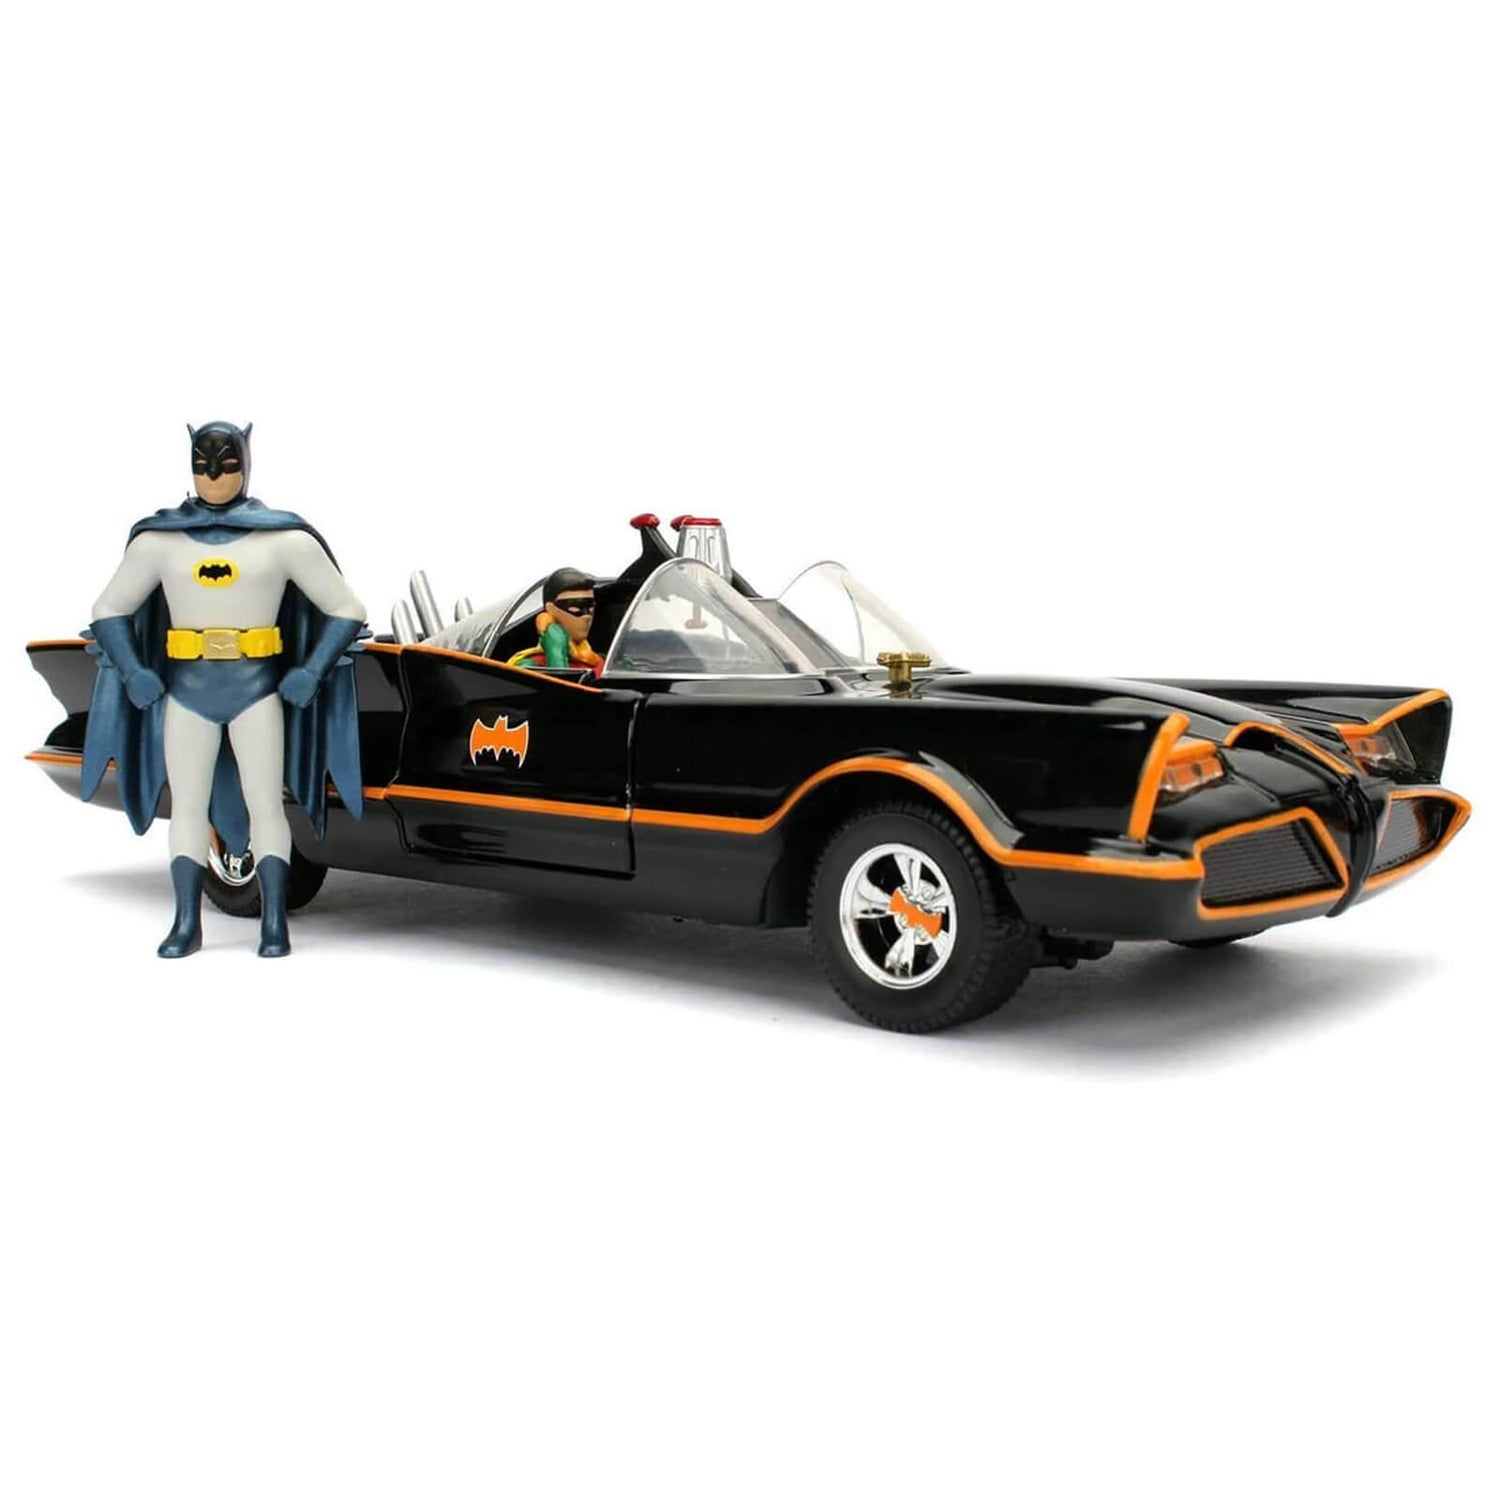 Jada Druckguss im Maßstab 1:24 1966 Batmobile mit Druckgussfiguren Batman und Robin